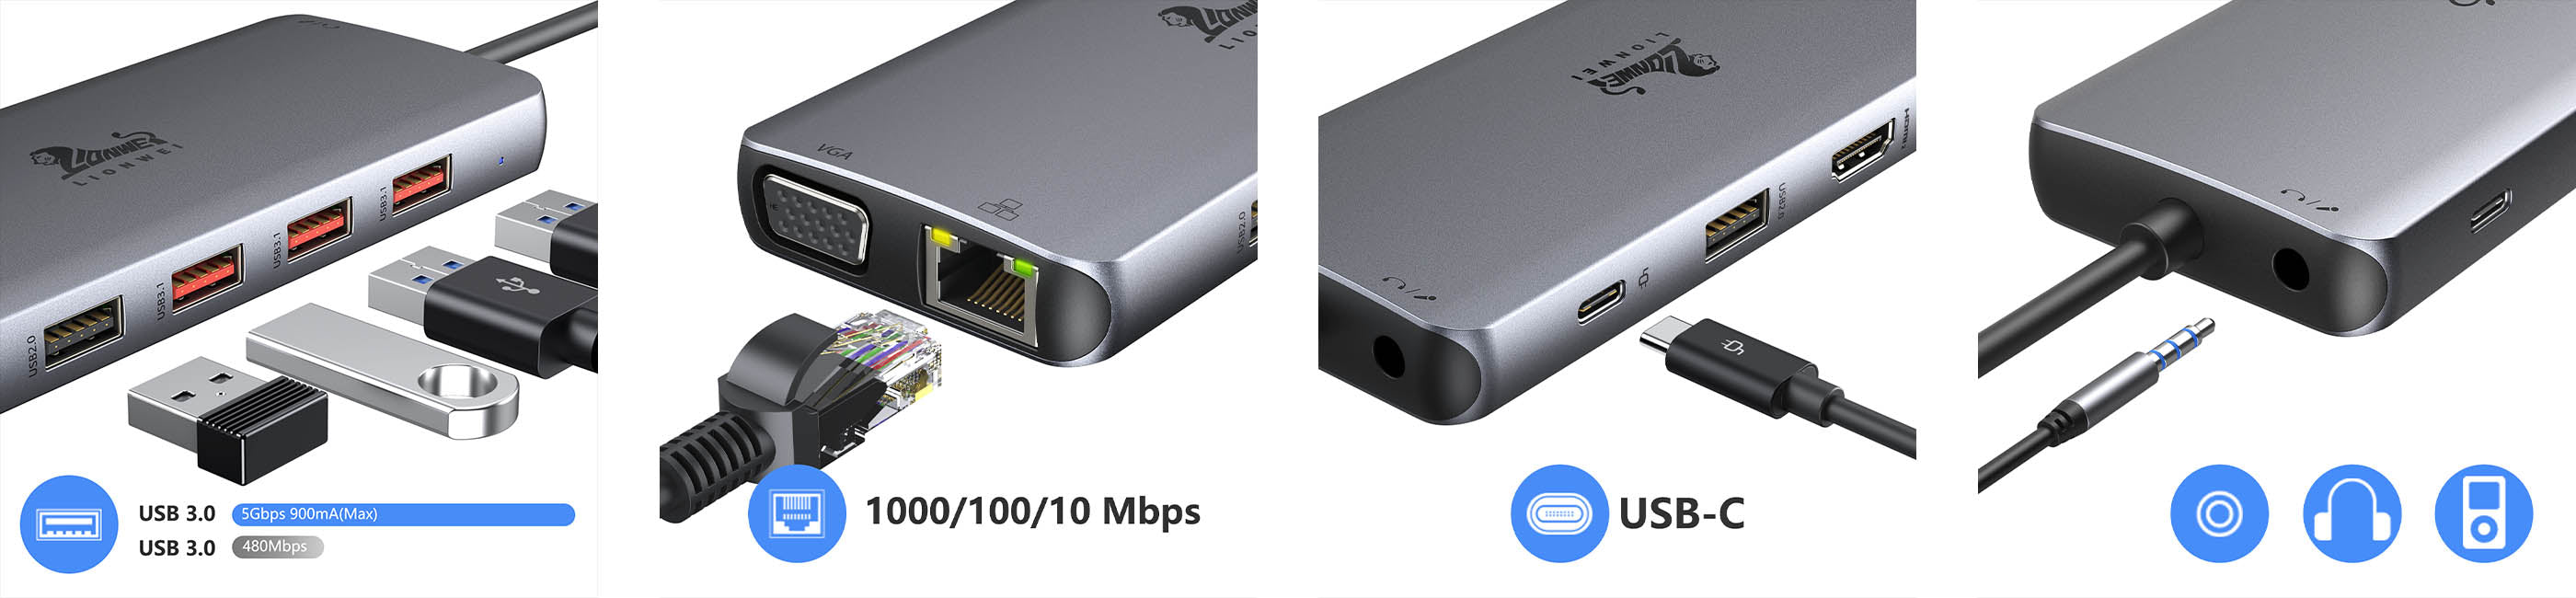 Lionwei 10 Gbps USB C Docking Station Triple Monitor 11-IN-1